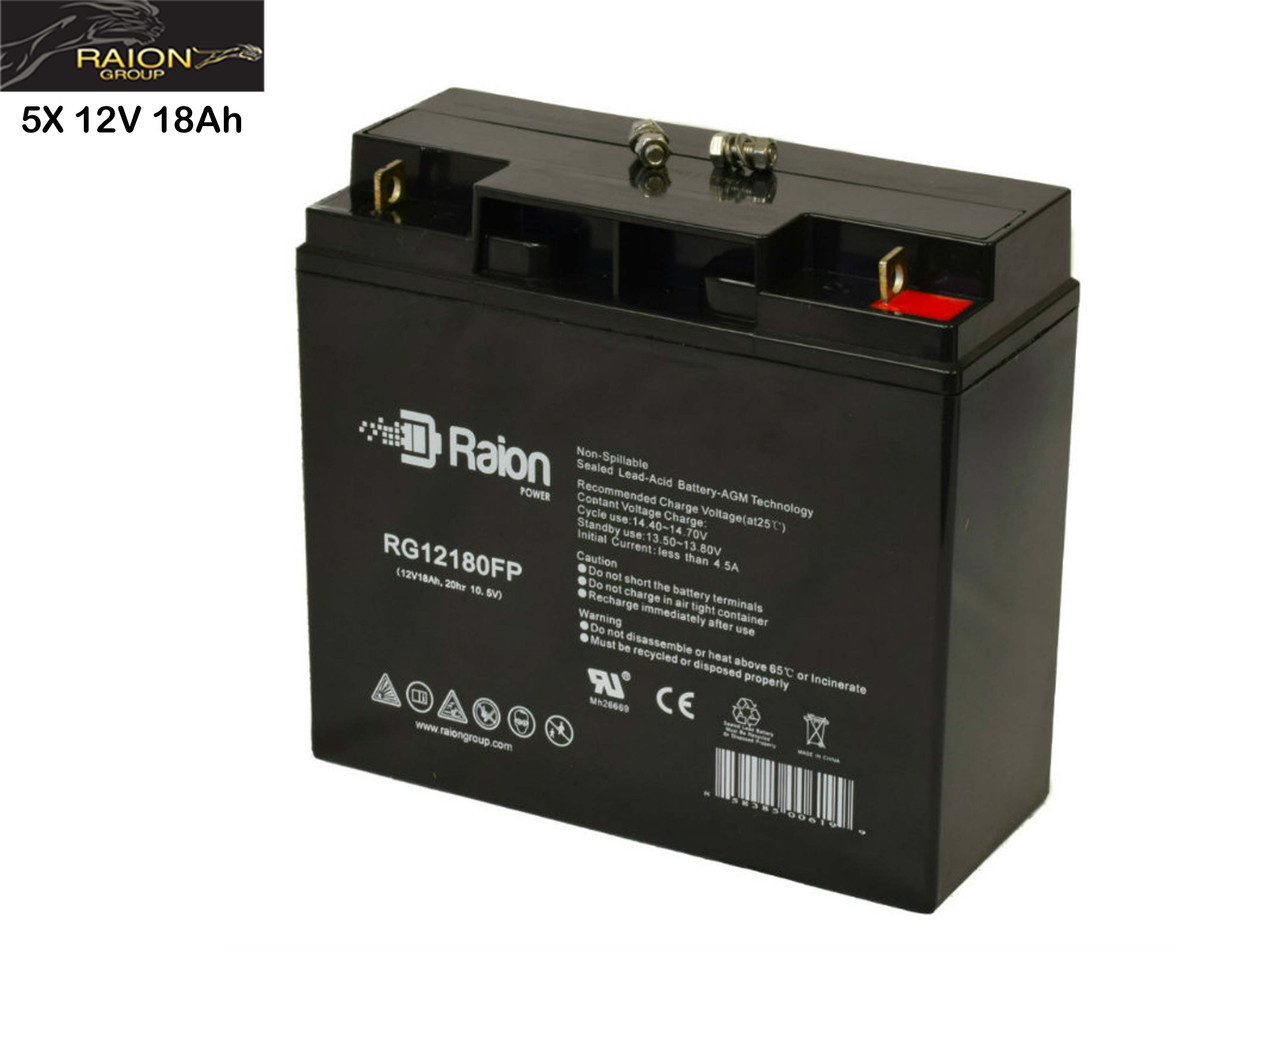 Raion Power Replacement 12V 18Ah Battery for EWheels EW-44 - 5 Pack